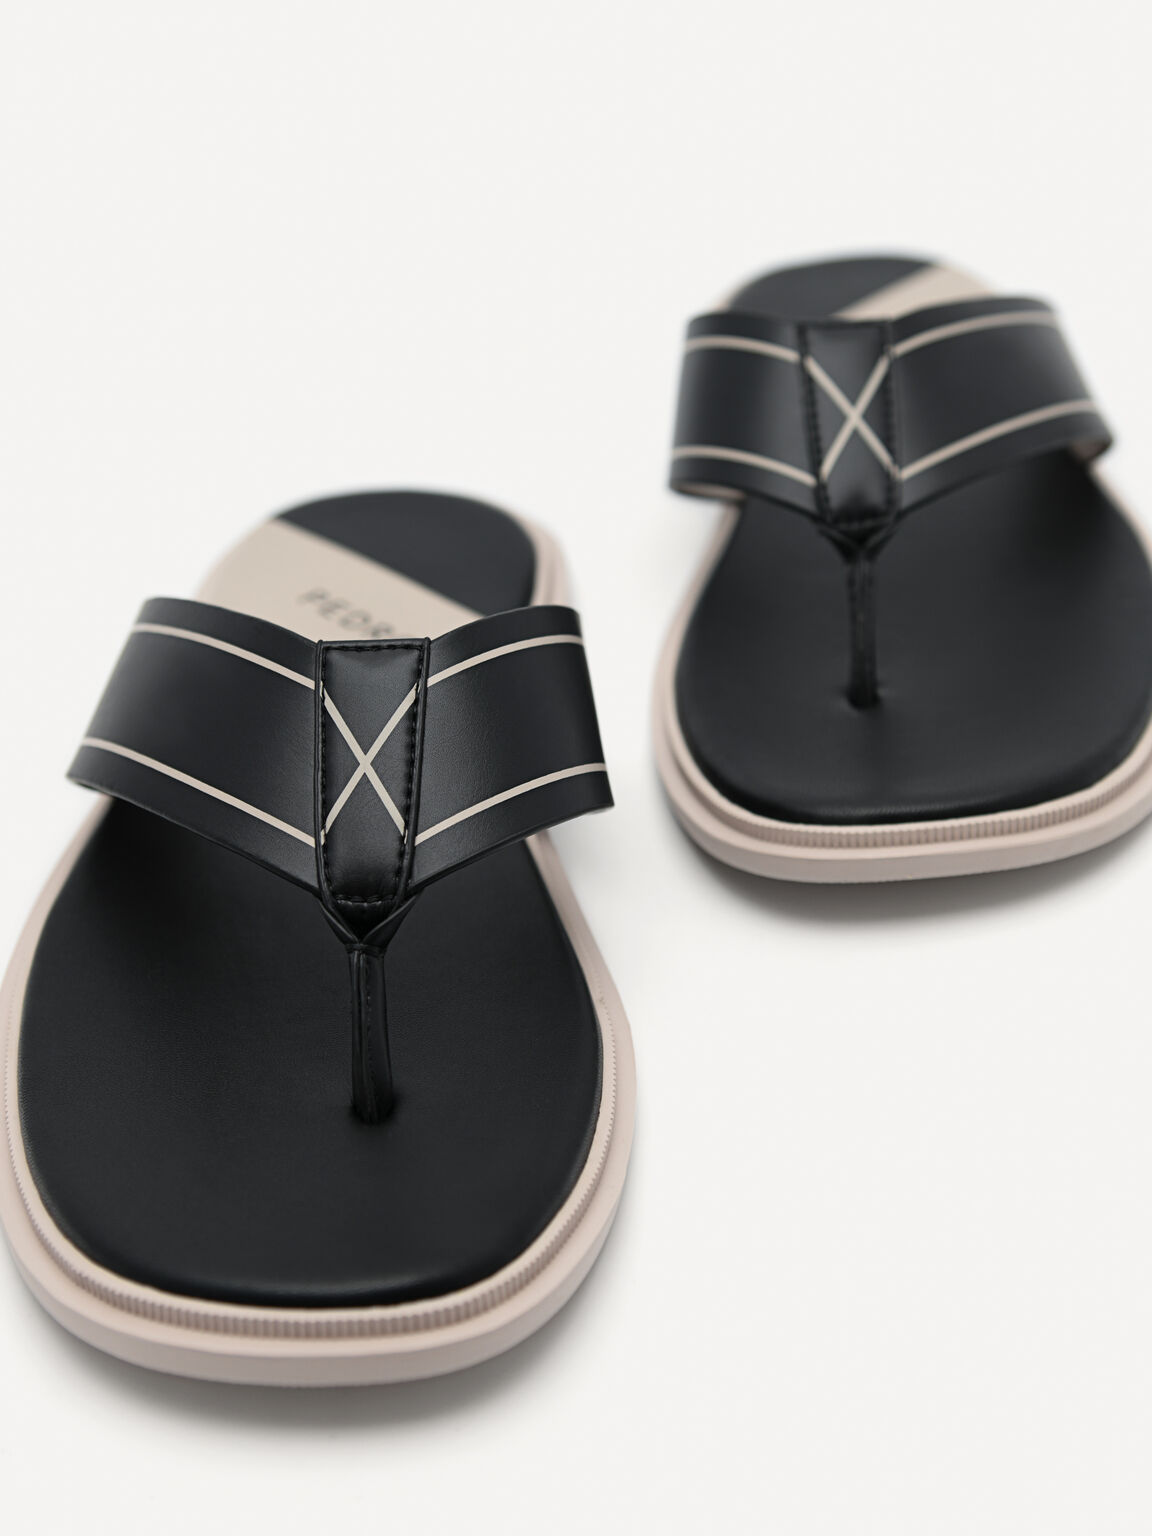 Flex Sandals, Black